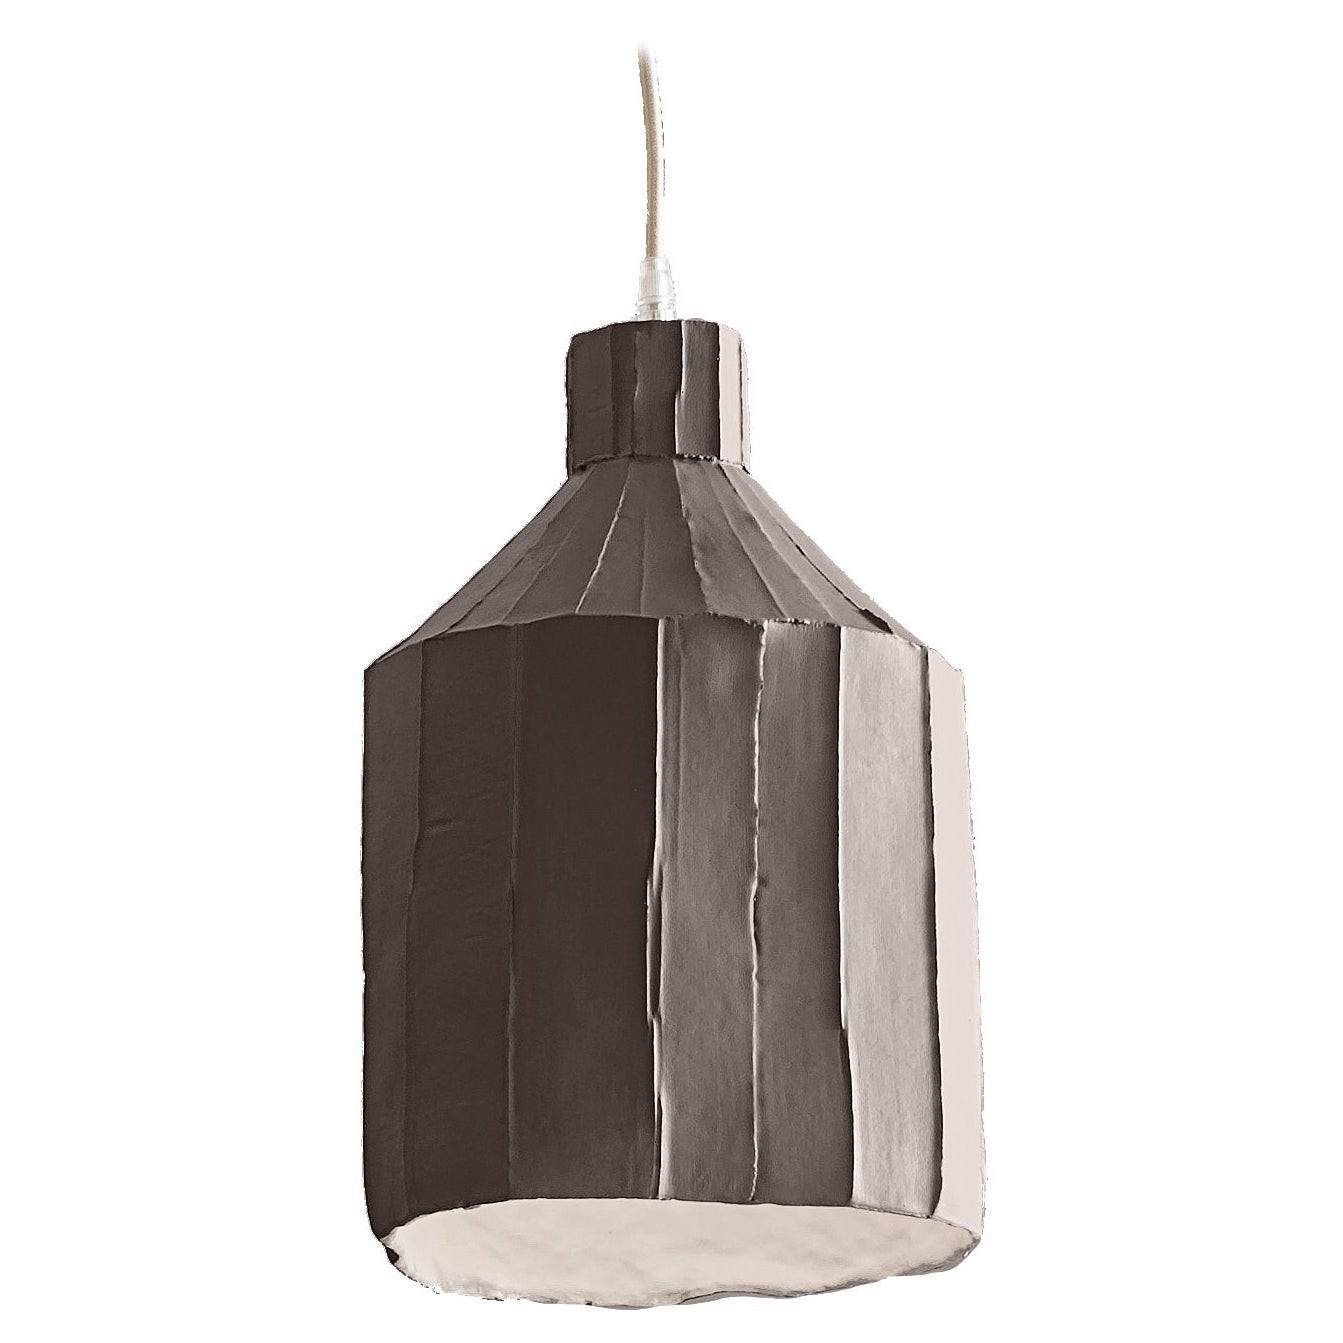 Zeitgenössische SUFI-Lampe Corteccia aus Keramik in Dunkelgrau mit Textur